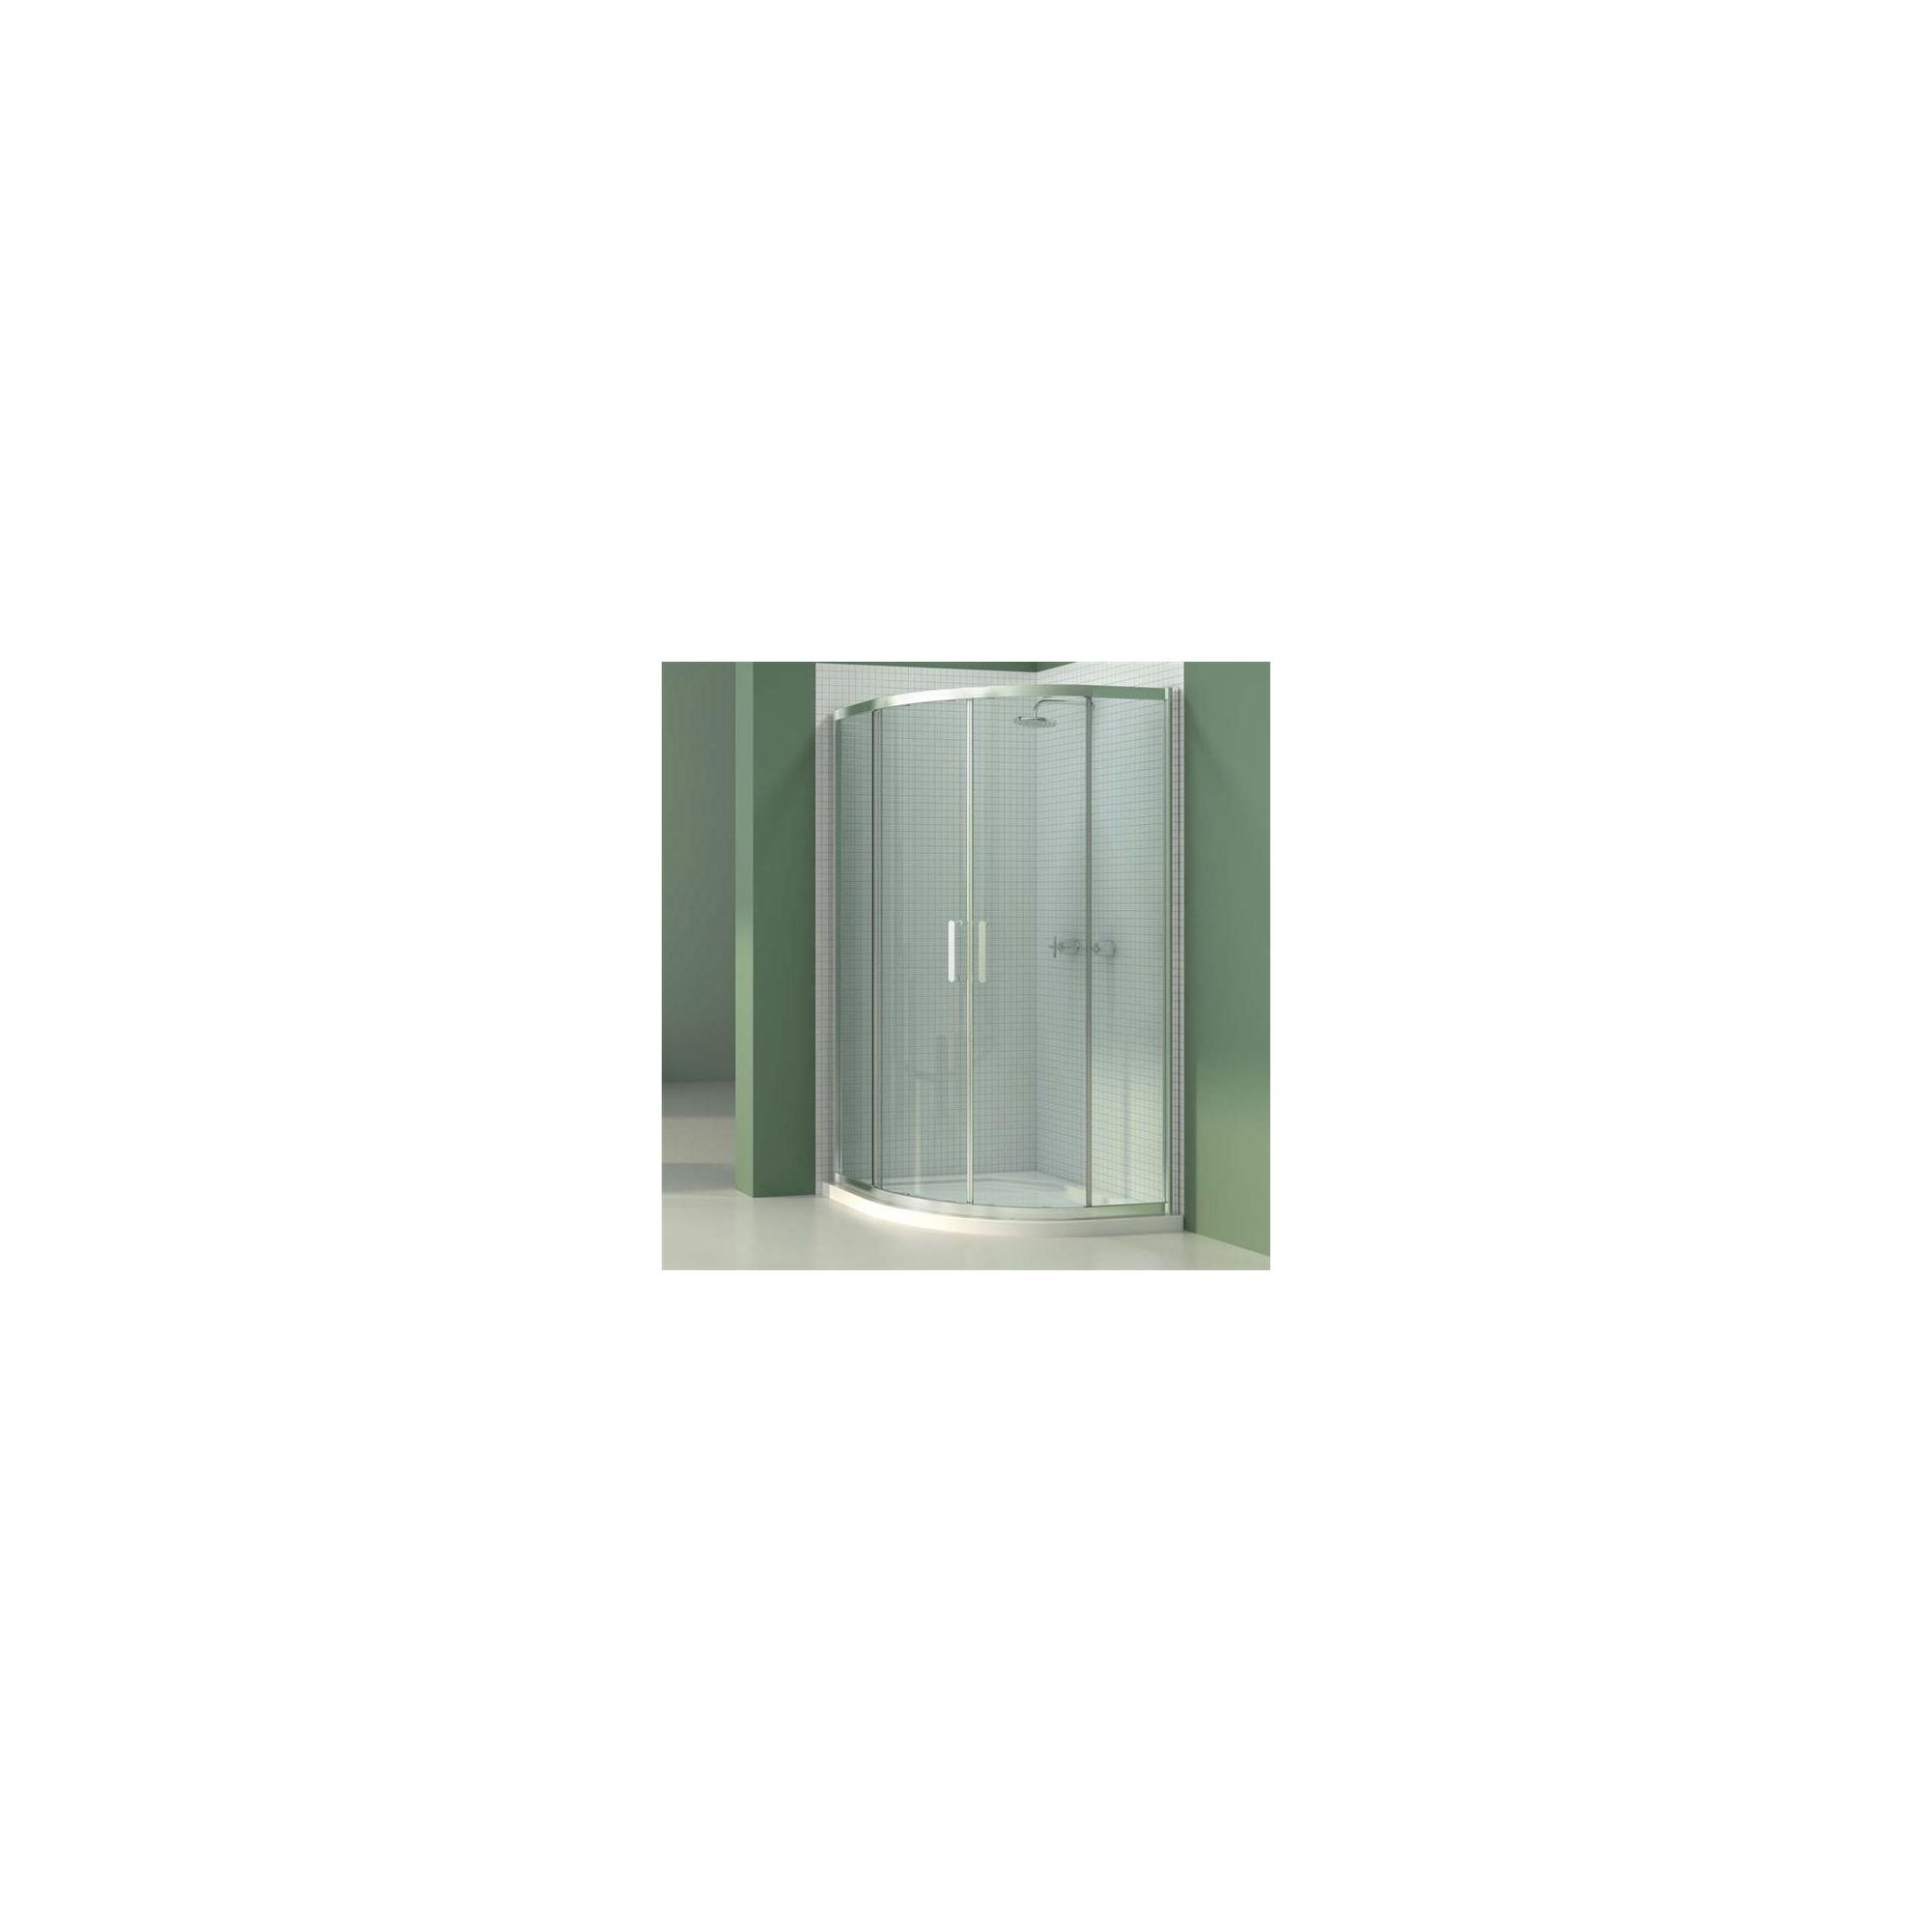 Merlyn Vivid Six Quadrant Shower Enclosure, 900mm x 900mm, Low Profile Tray, 6mm Glass at Tesco Direct